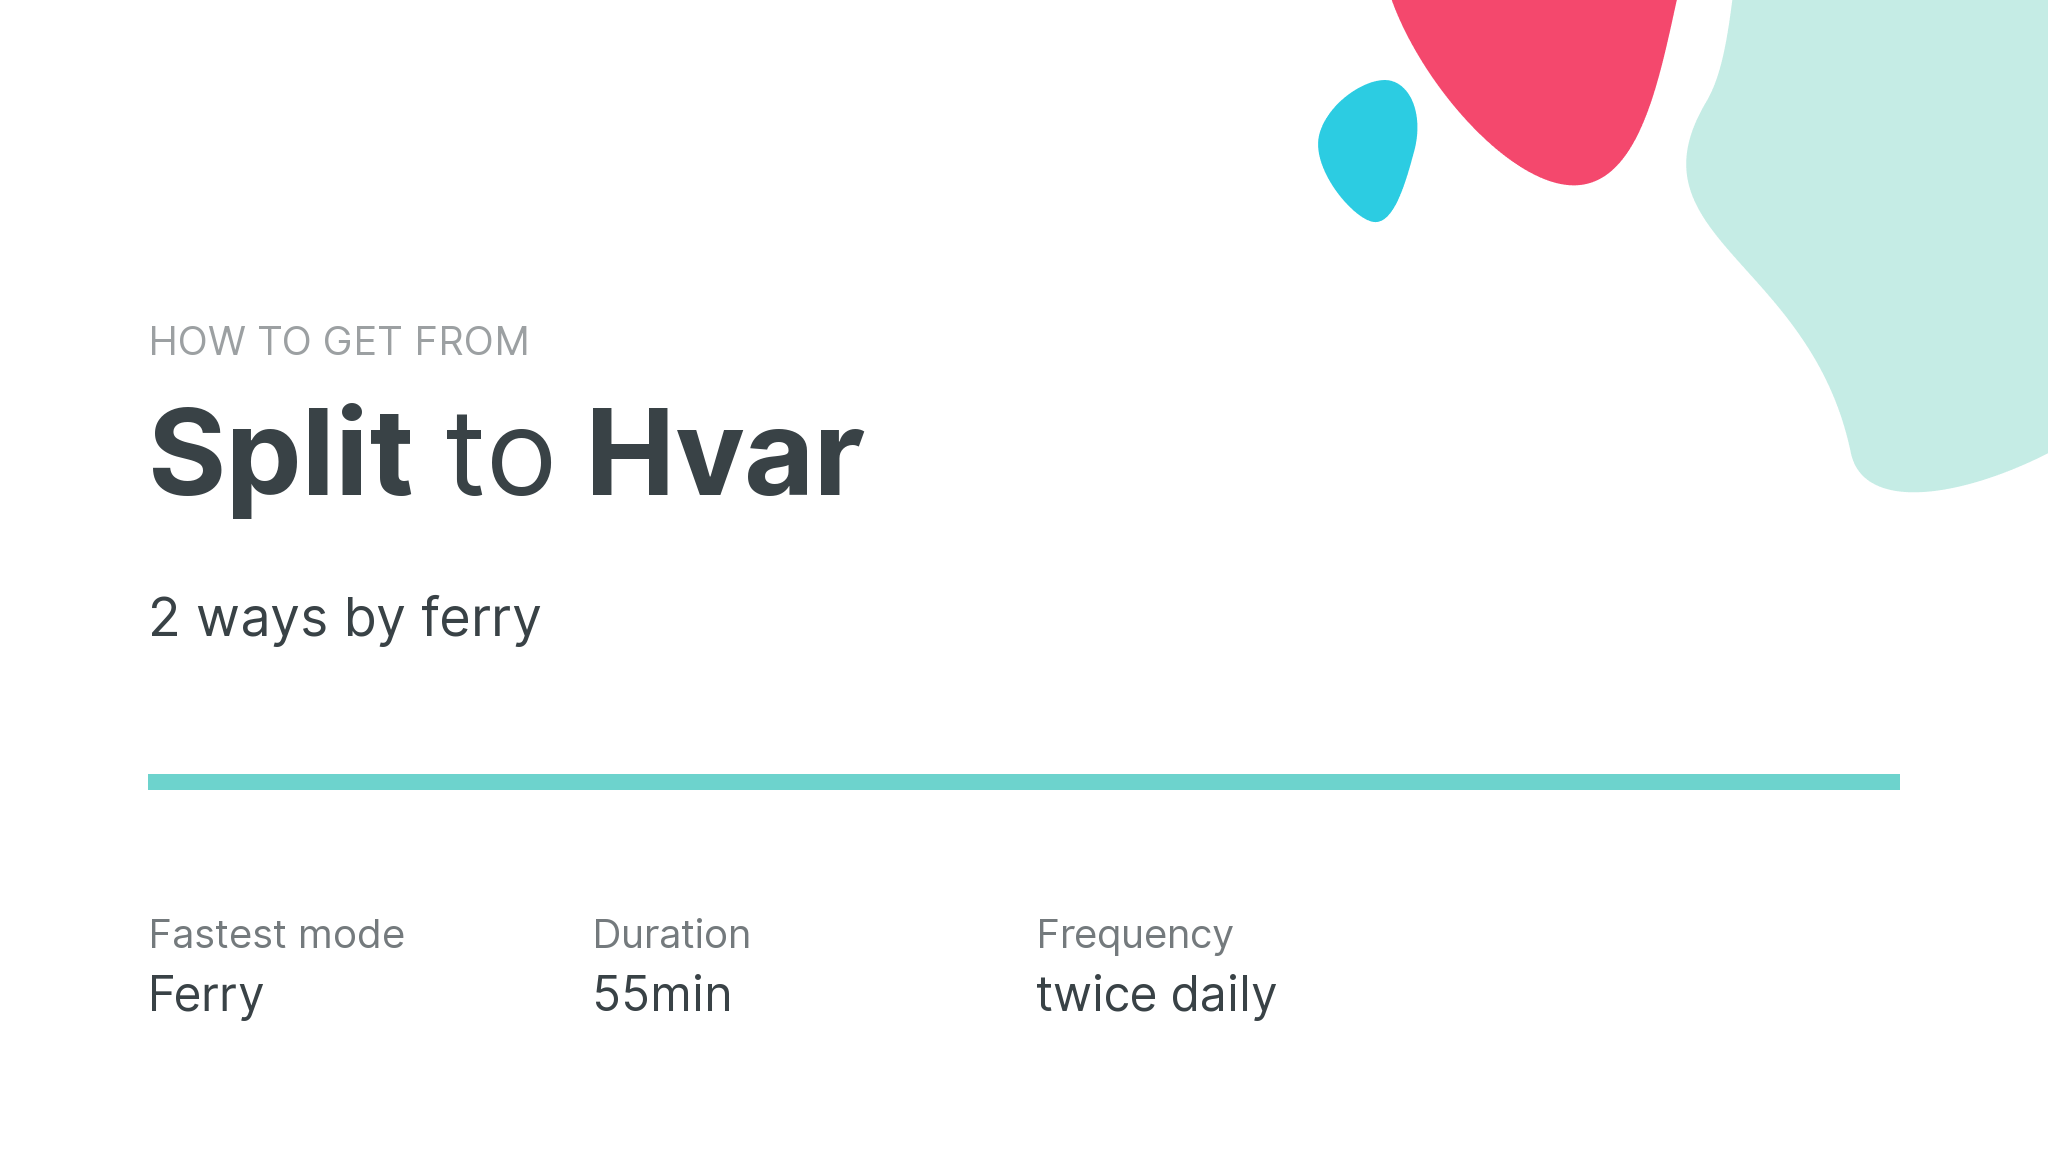 How do I get from Split to Hvar